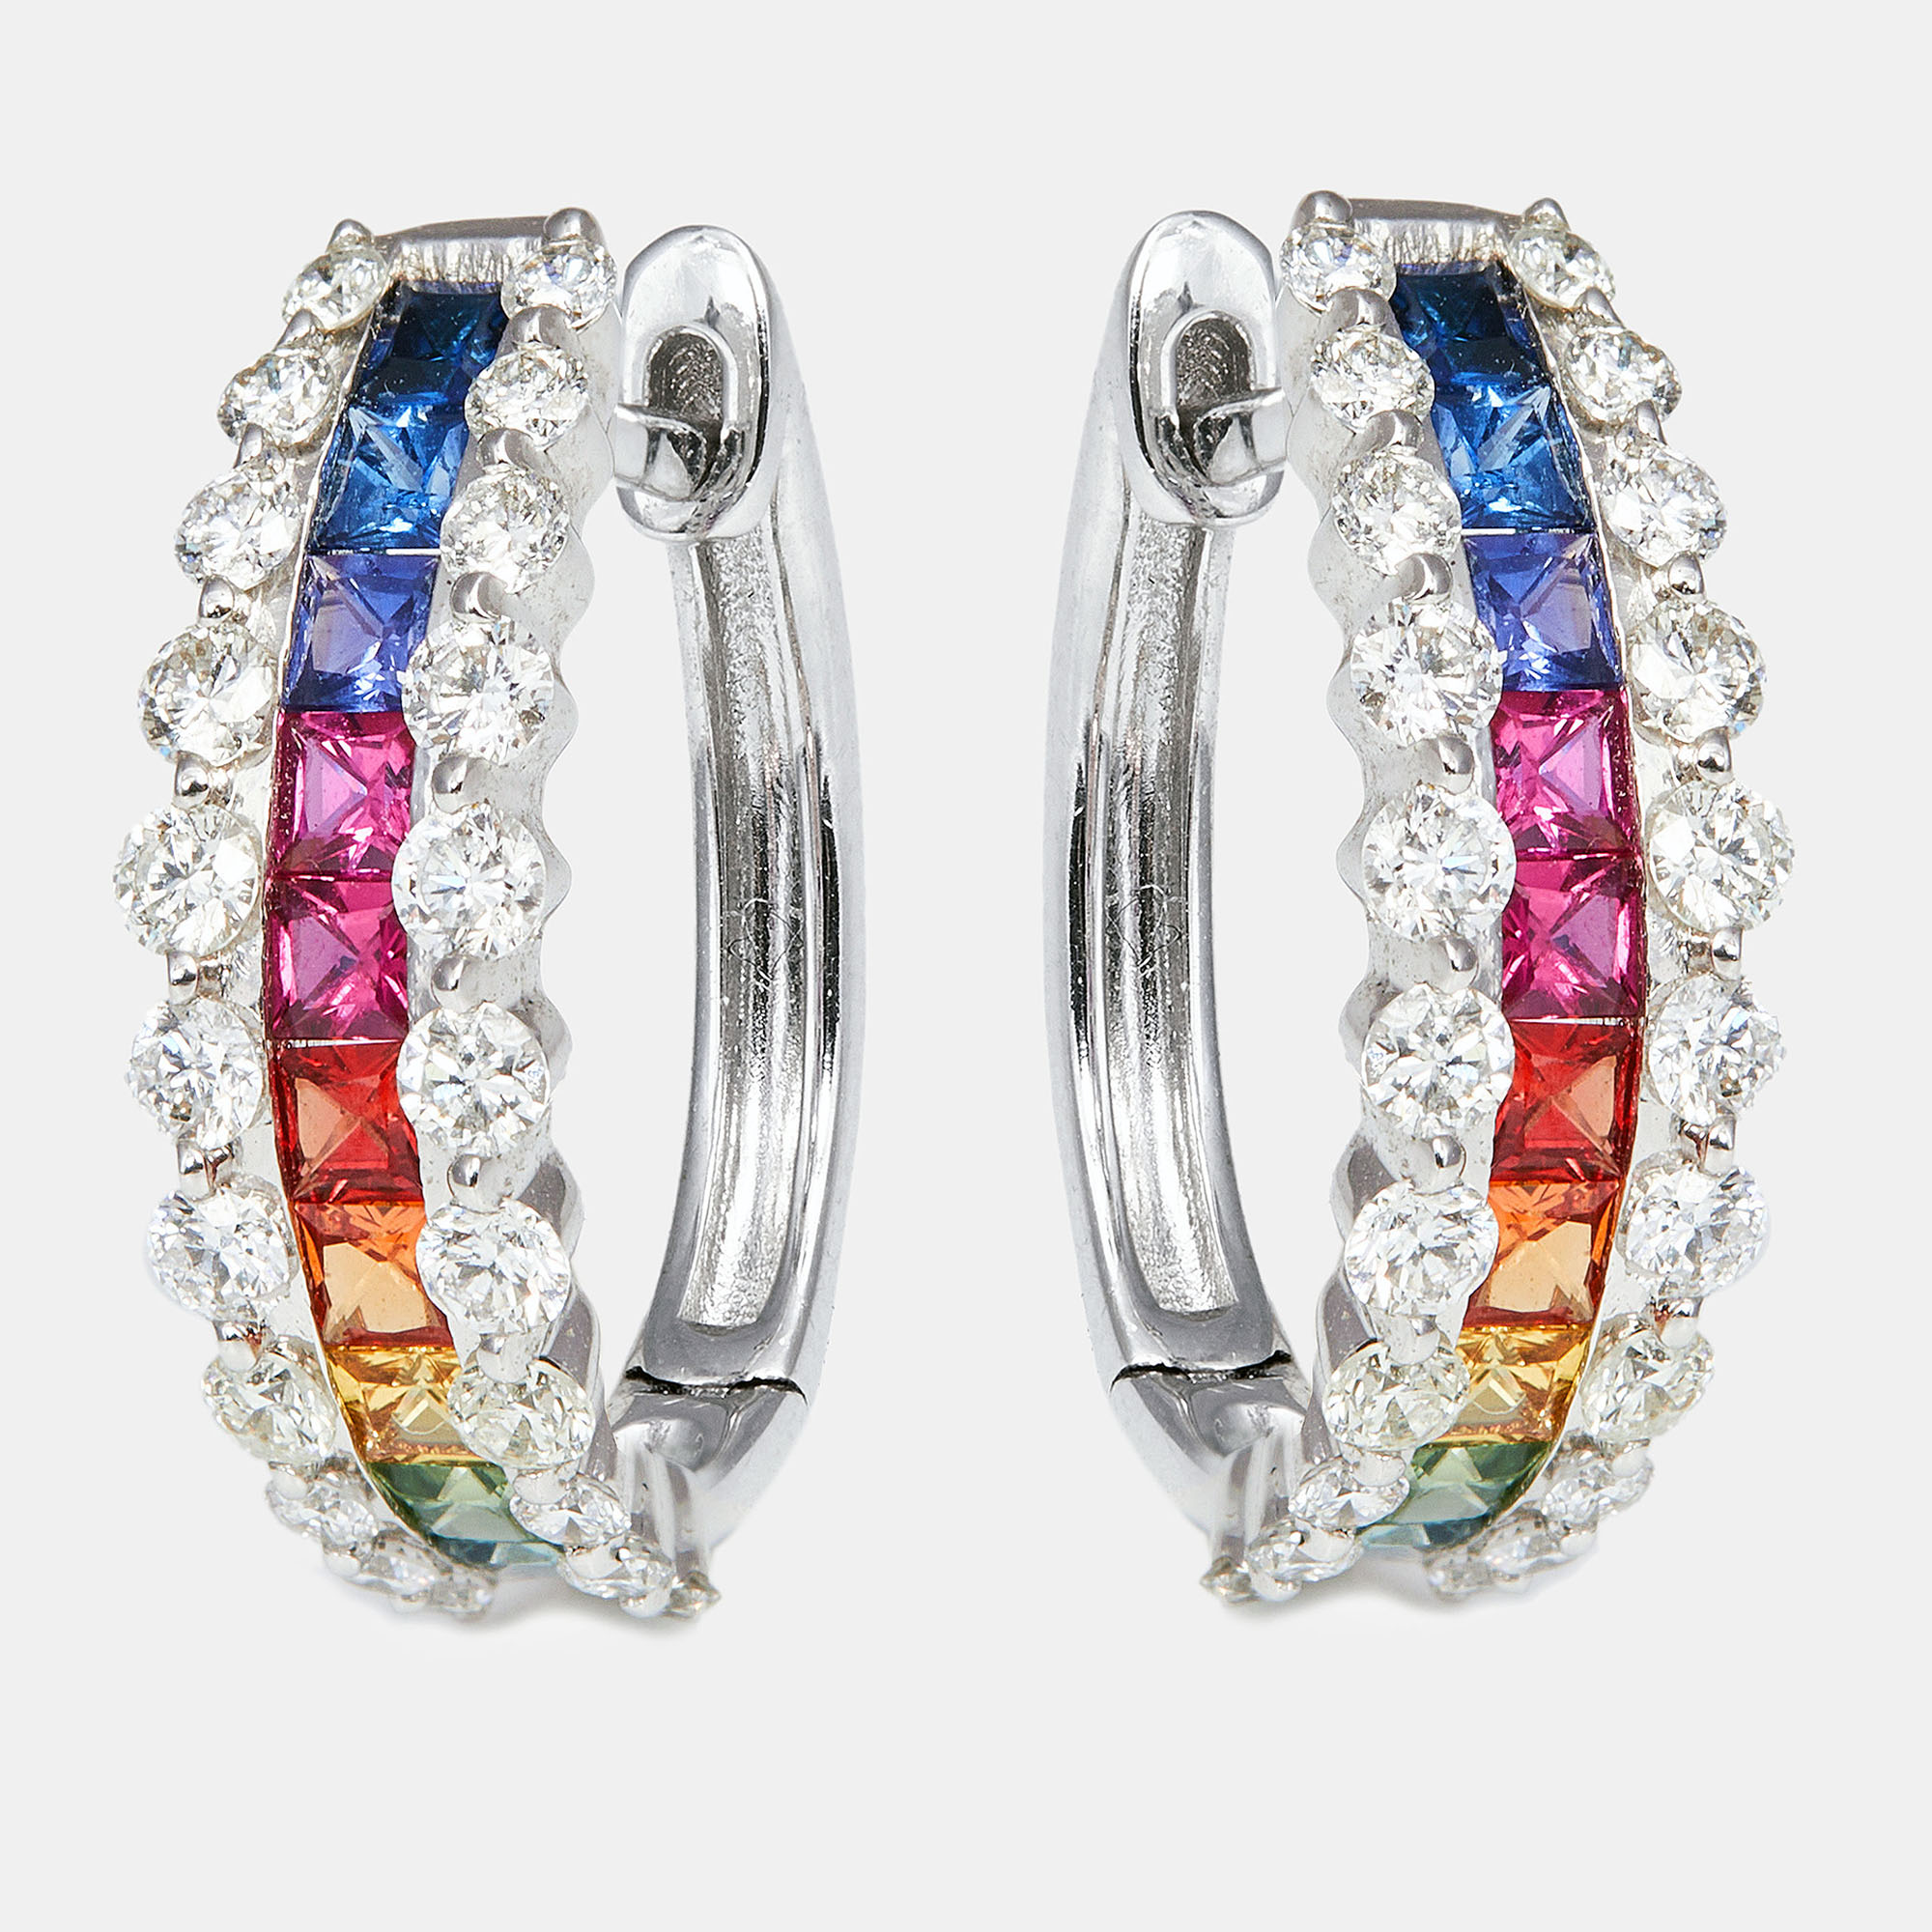 The diamond edit elegant multi colored stones diamond 18k white gold earring